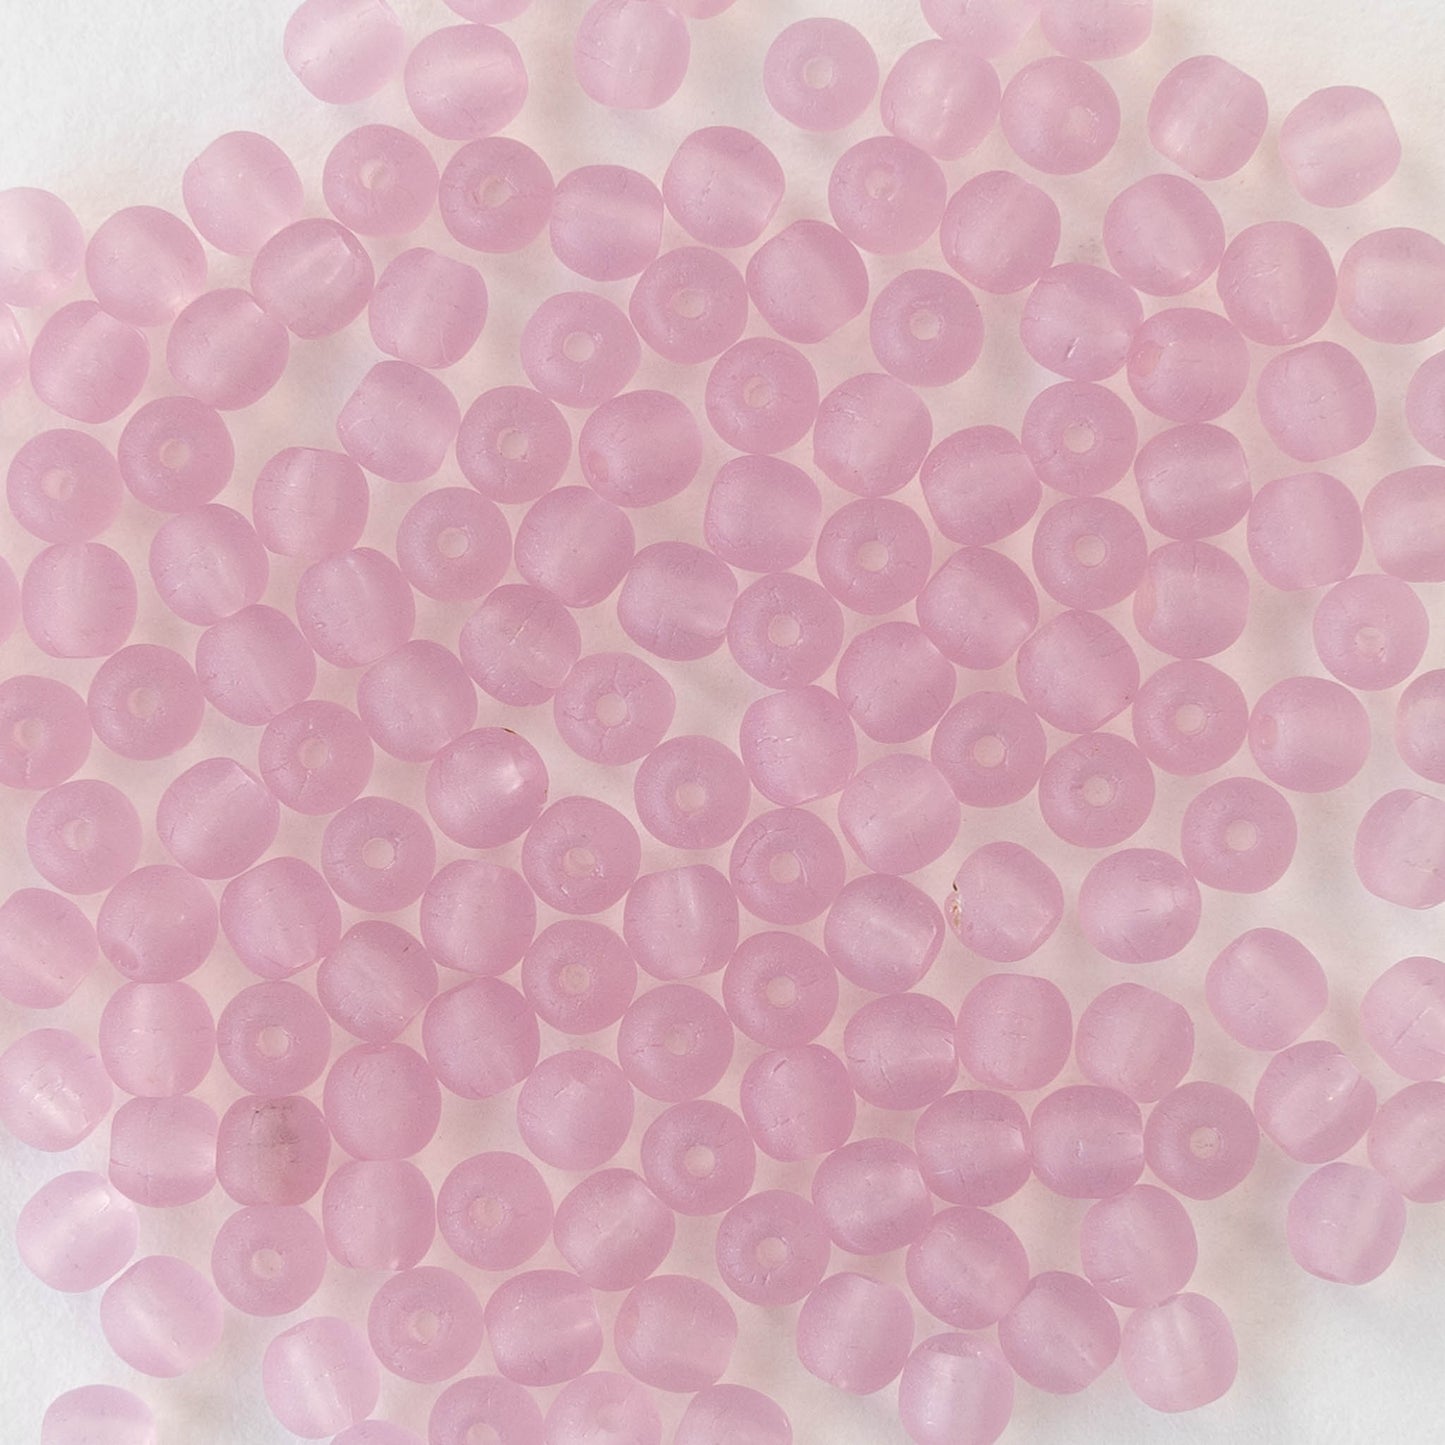 3mm Round Glass Beads - Pink Matte - 120 Beads